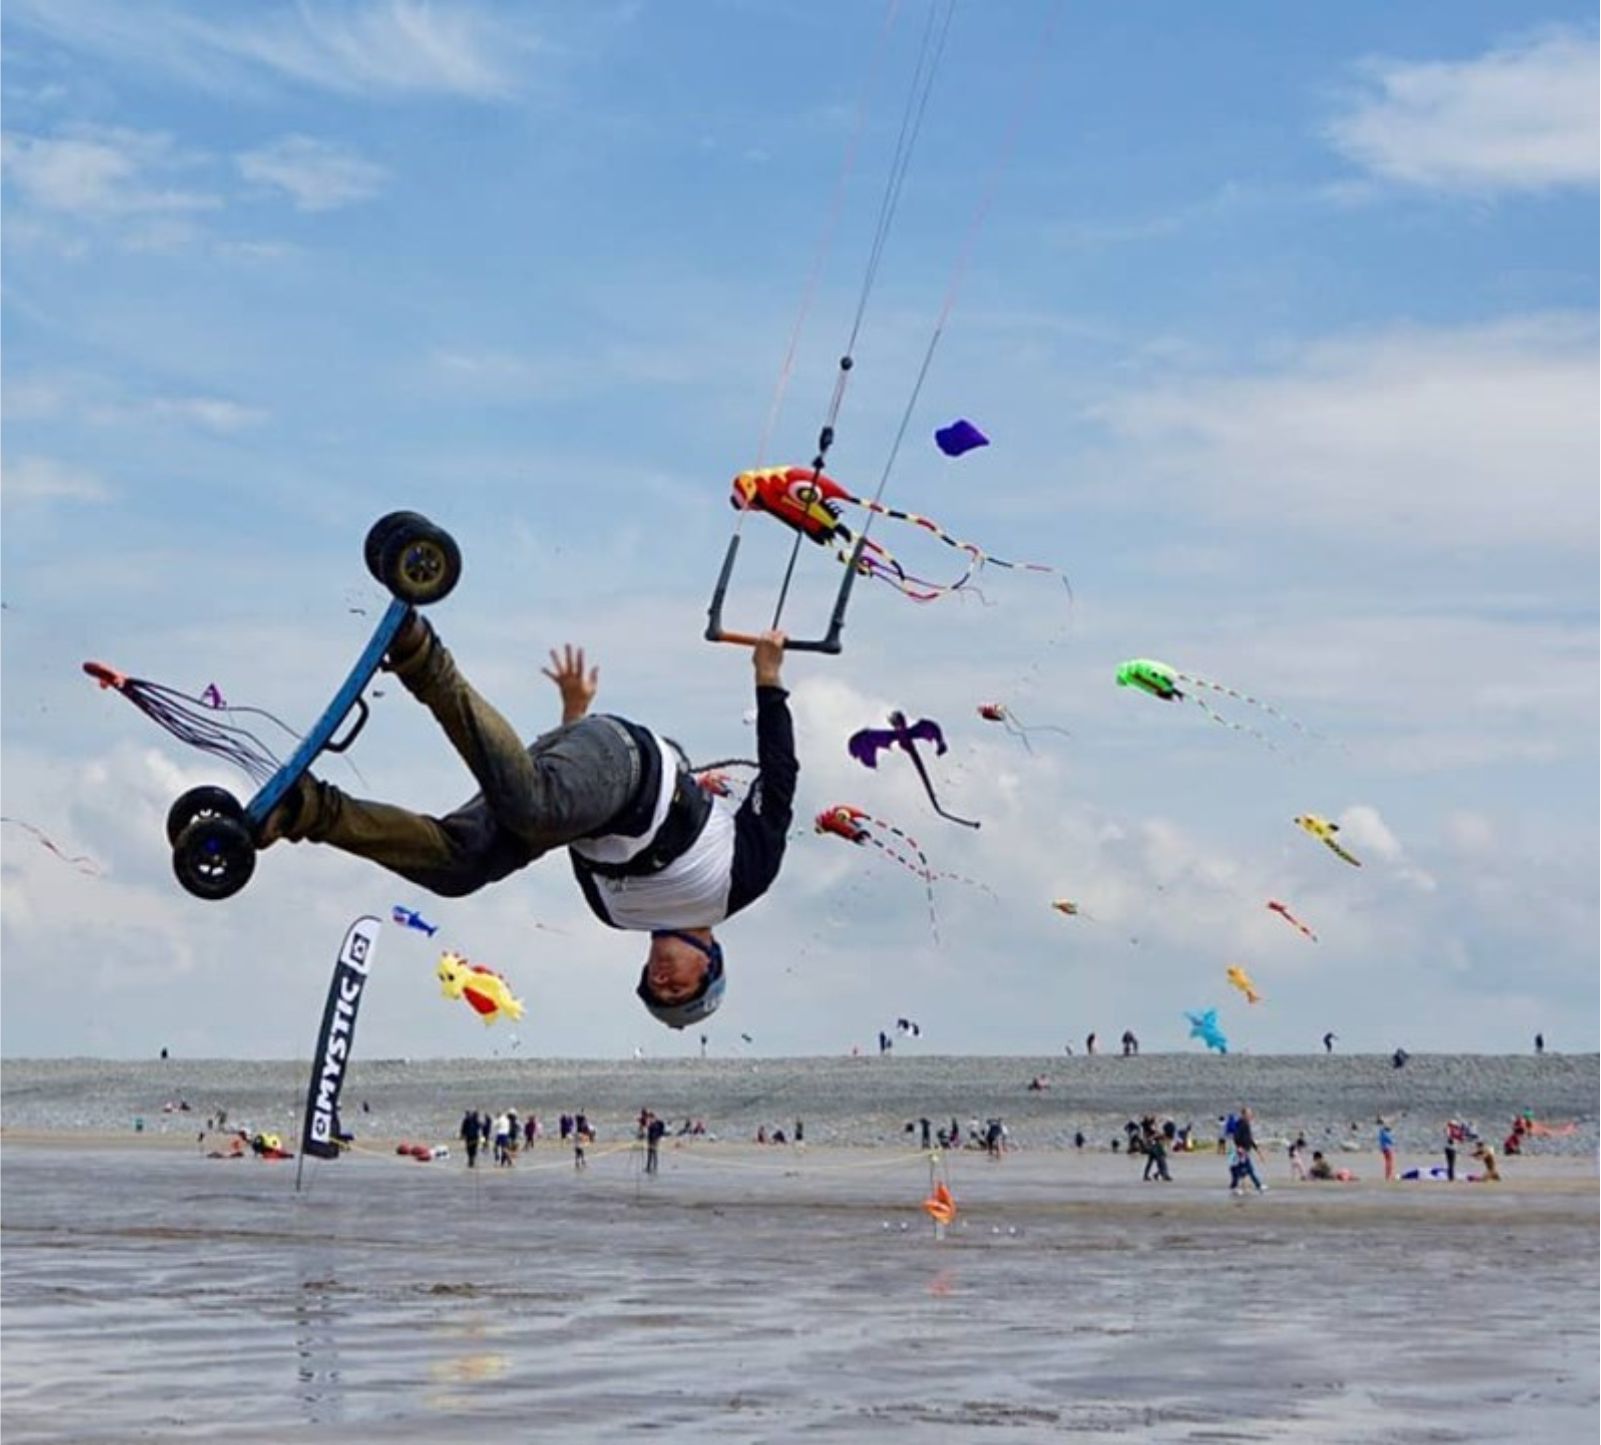 flying a stunt kite at Westward Ho! beach, UK